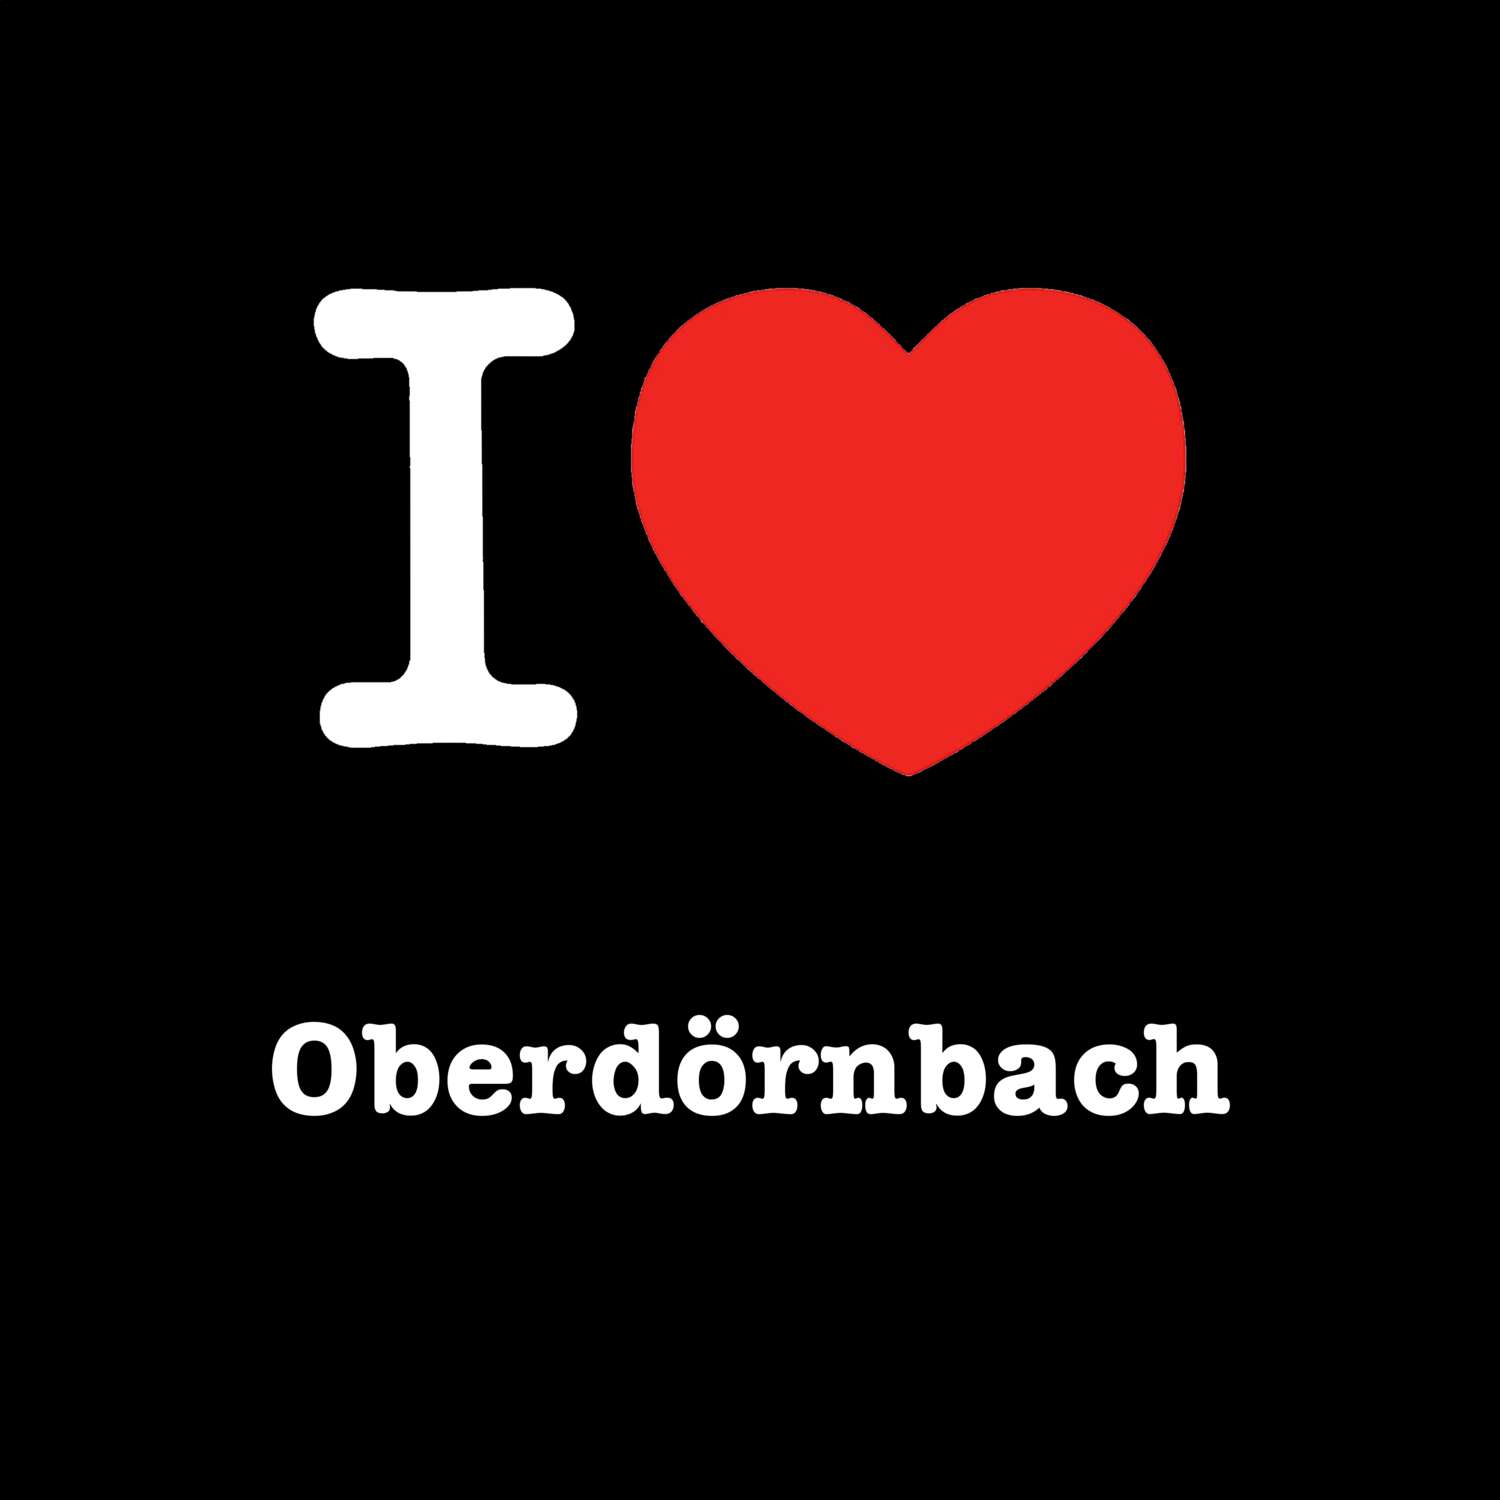 Oberdörnbach T-Shirt »I love«